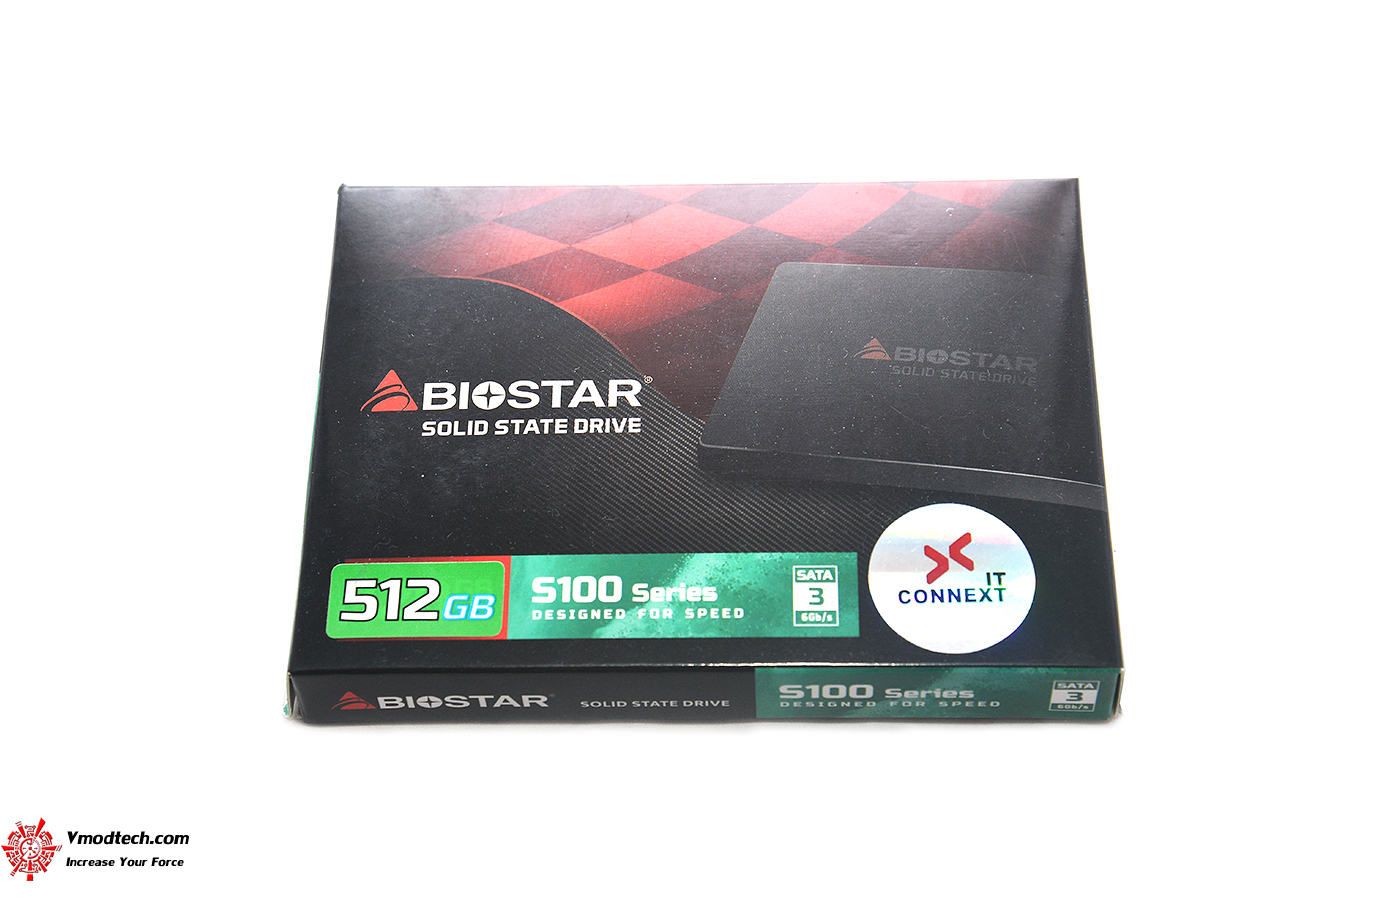 dsc 9899 Biostar SSD S130 512GB Review